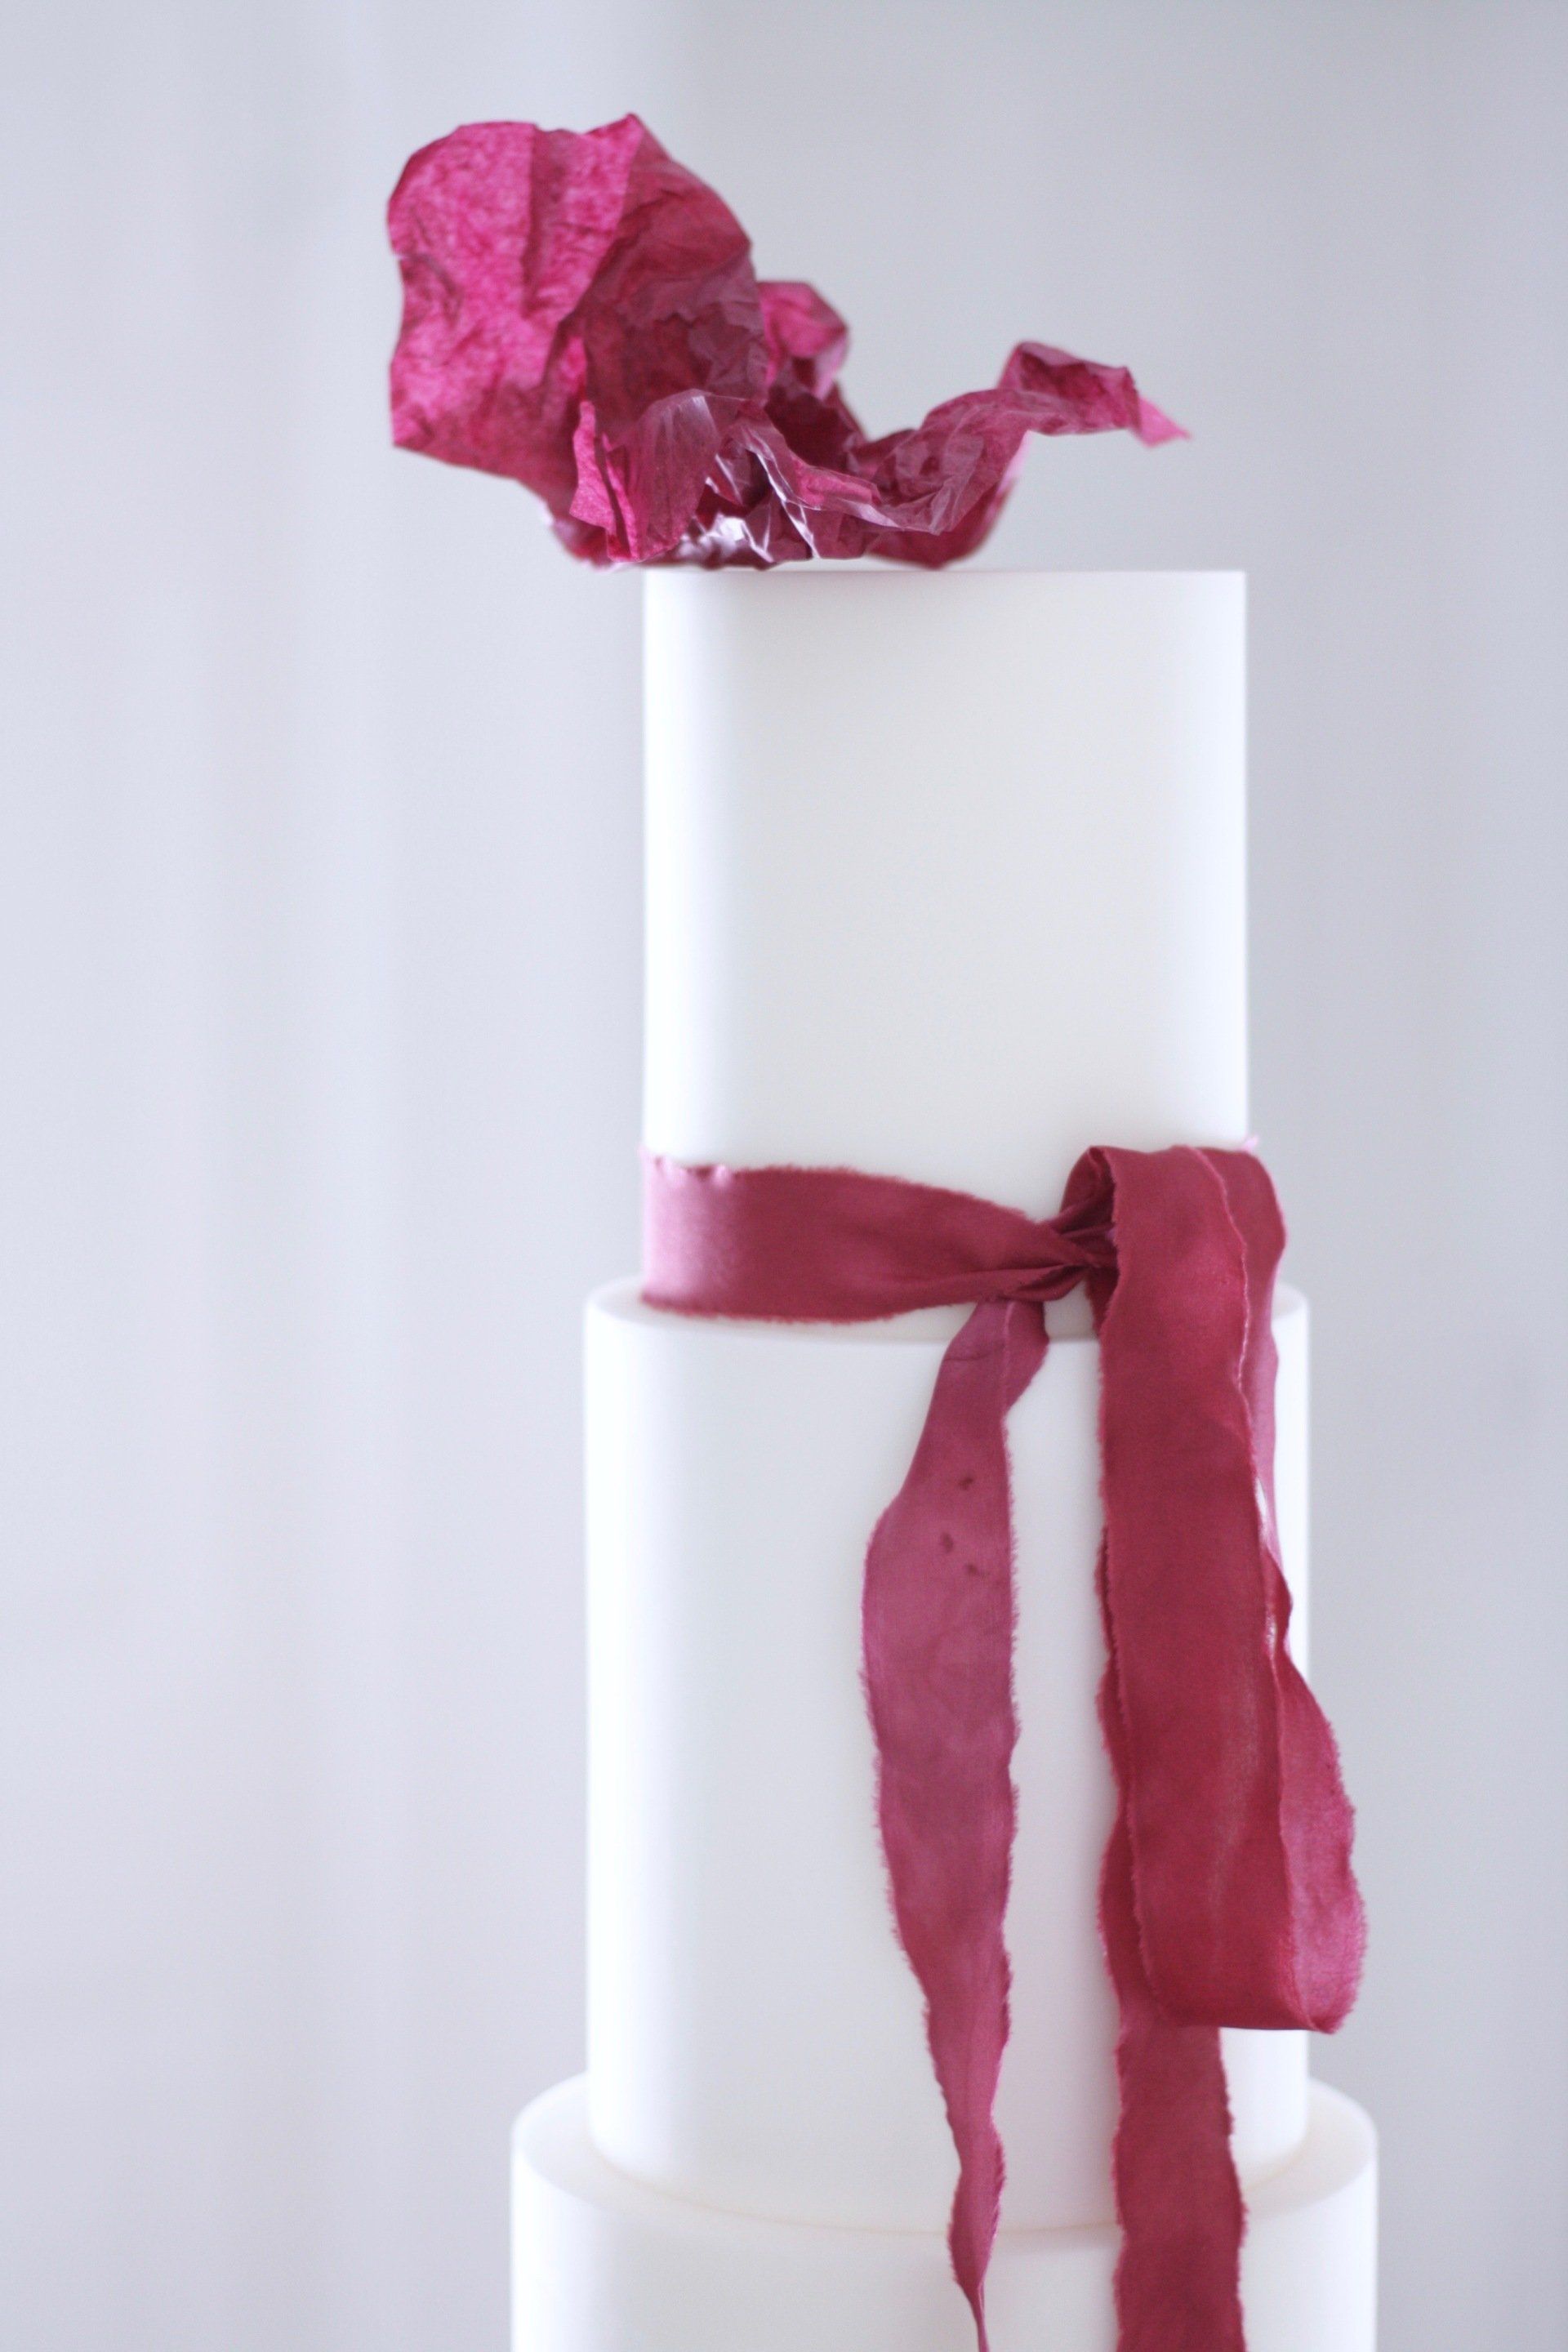 Minimalist wedding cake with burgundy silk ribbon